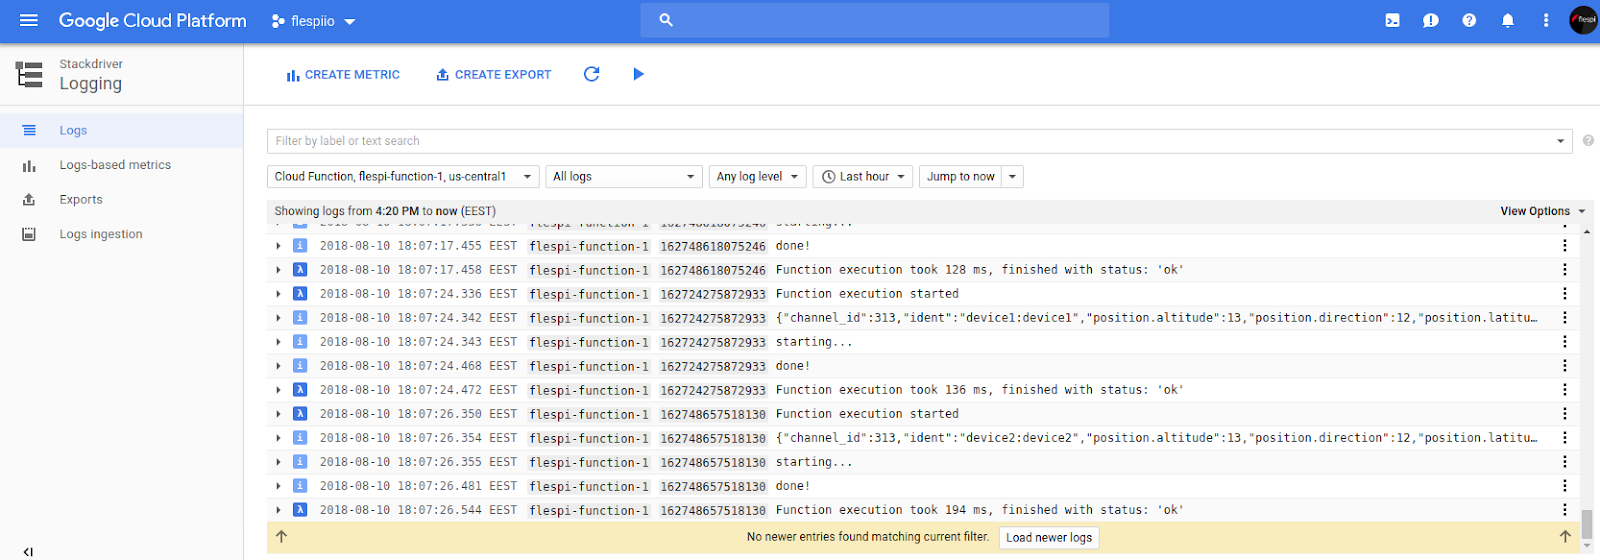 google cloud function log